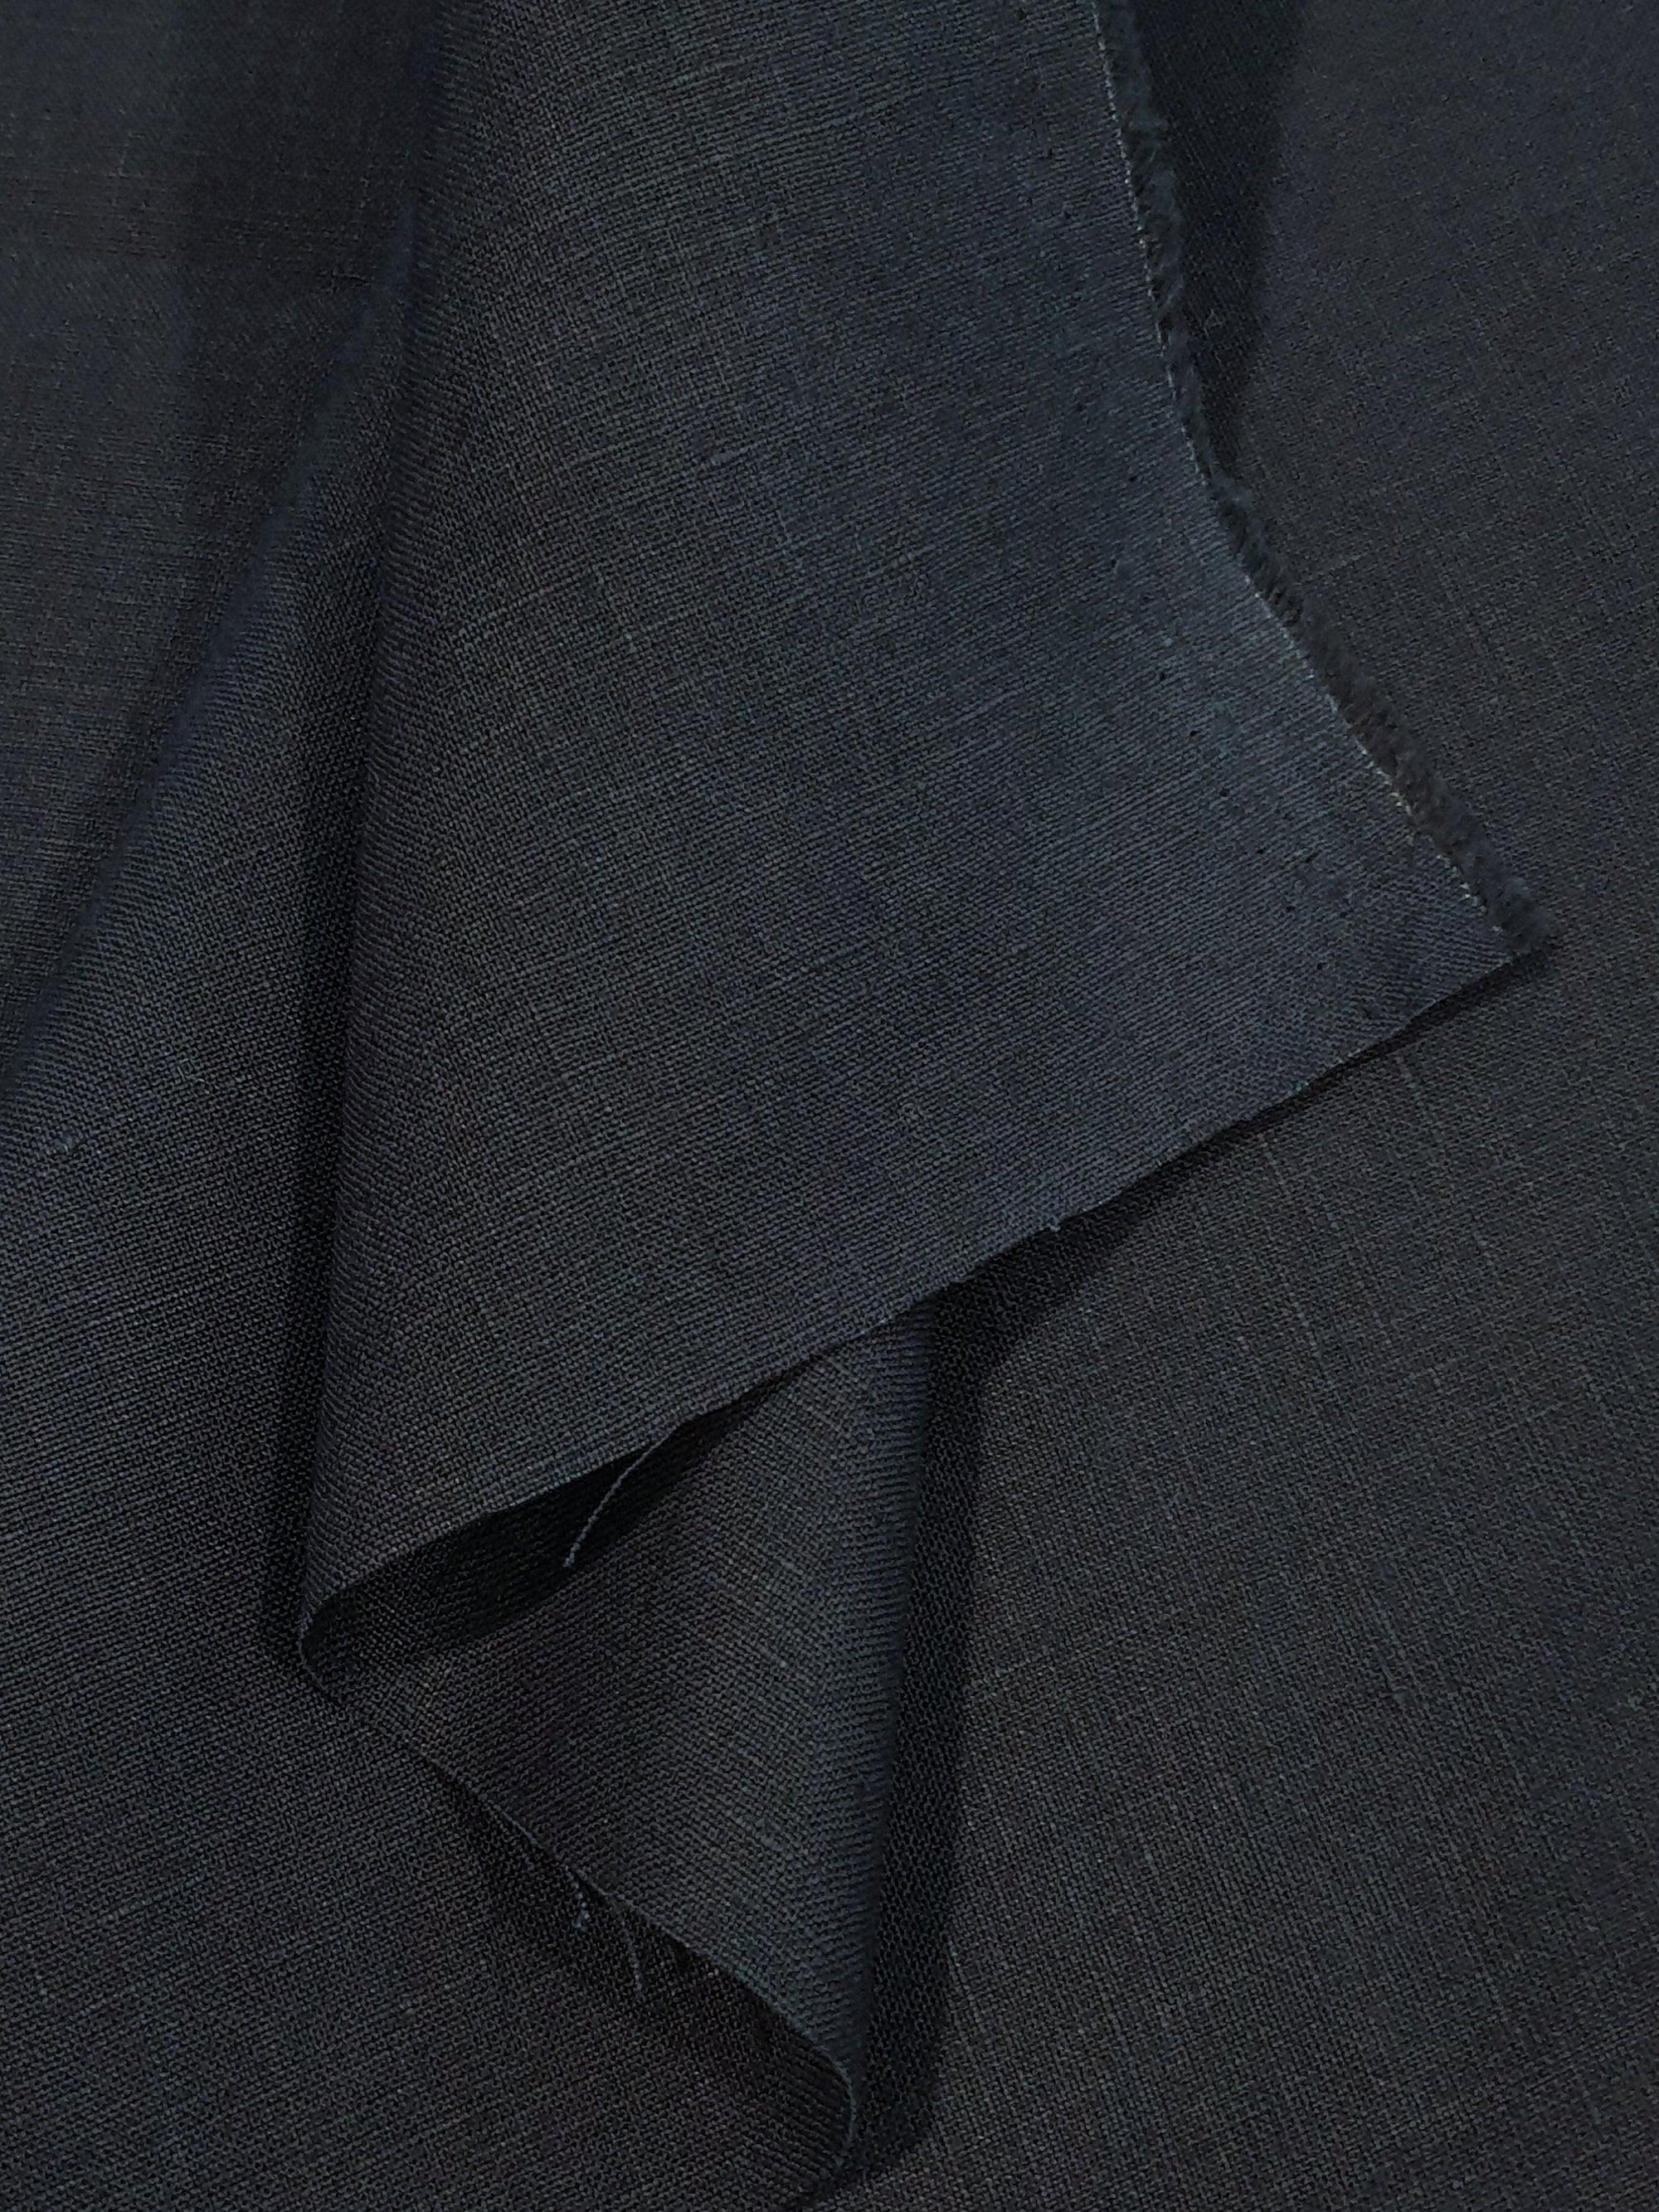 950.059 Dark Navy Irish Linen Suiting Fabrics